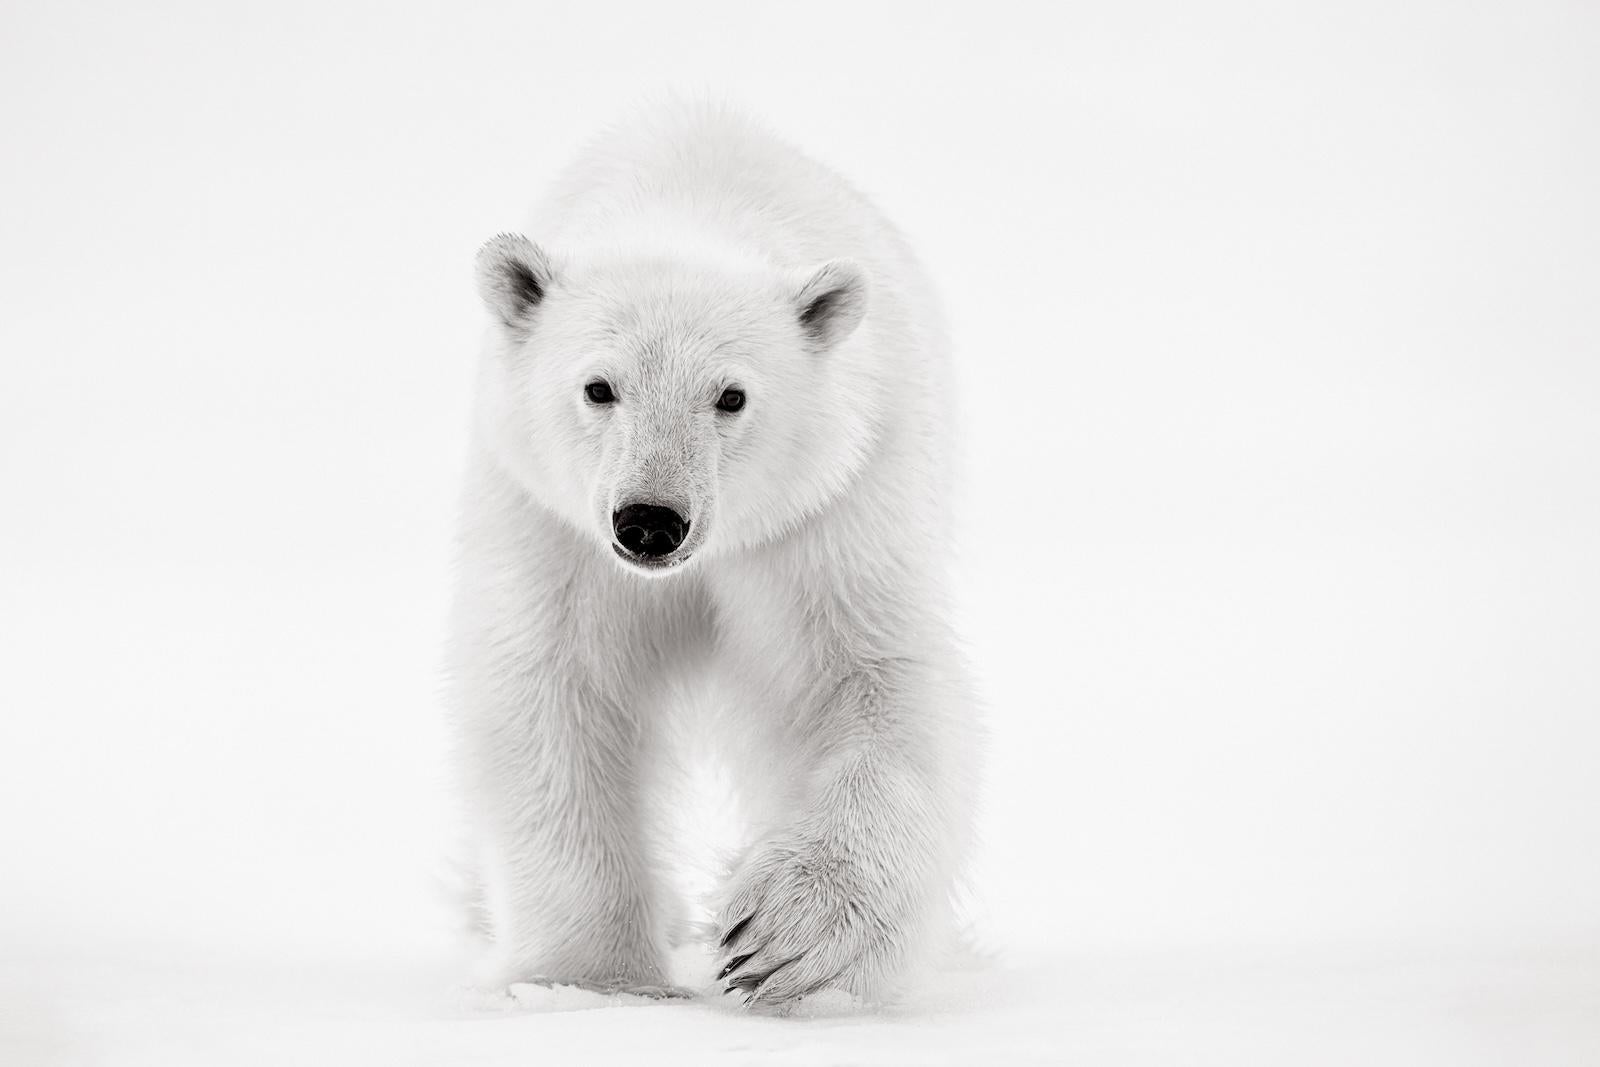 Drew Doggett Black and White Photograph - Beautiful, minimal photograph of a polar bear walking towards camera 